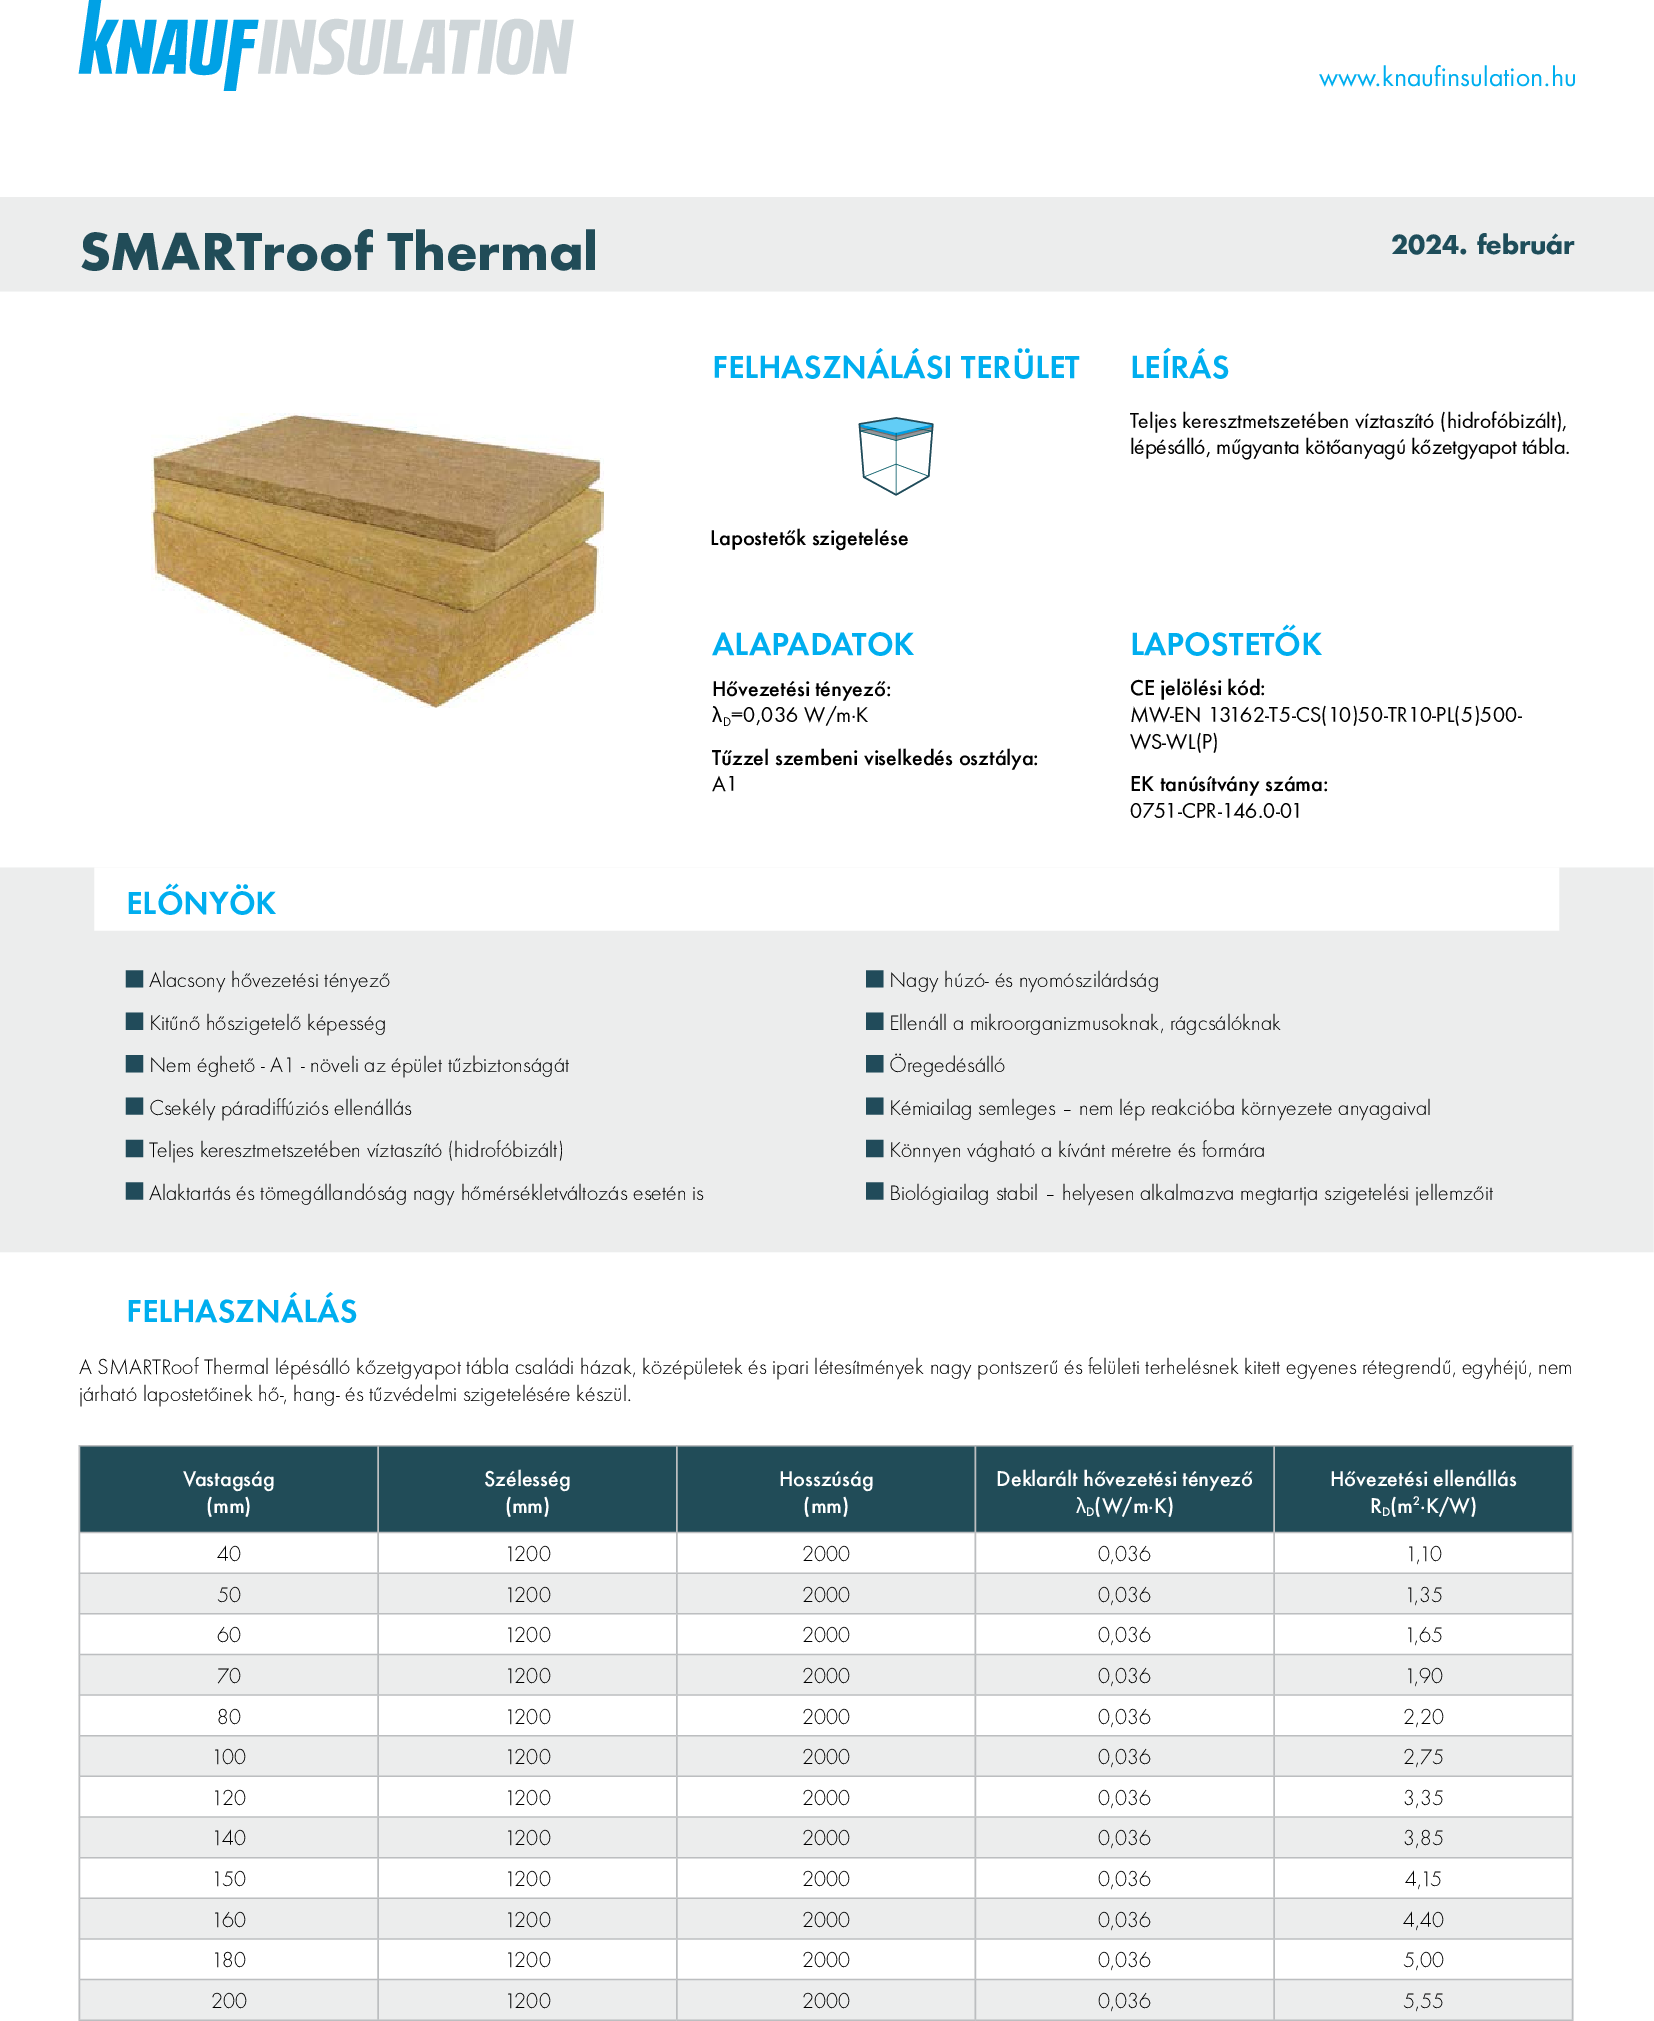 SMARTroof Thermal műszaki adatlap